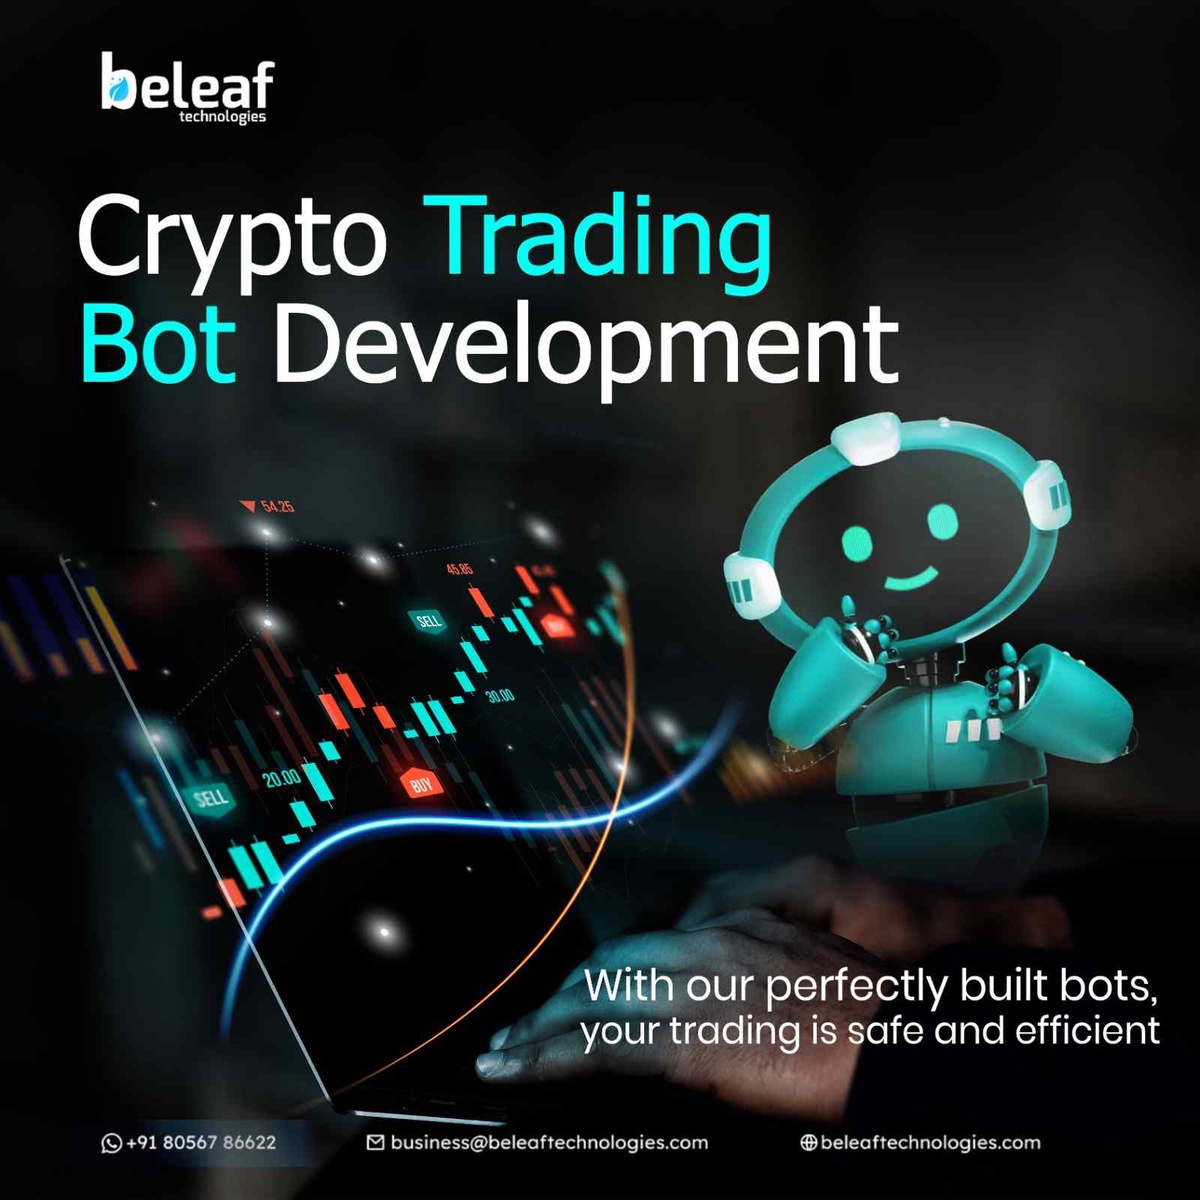 Telegram crypto trading bot development